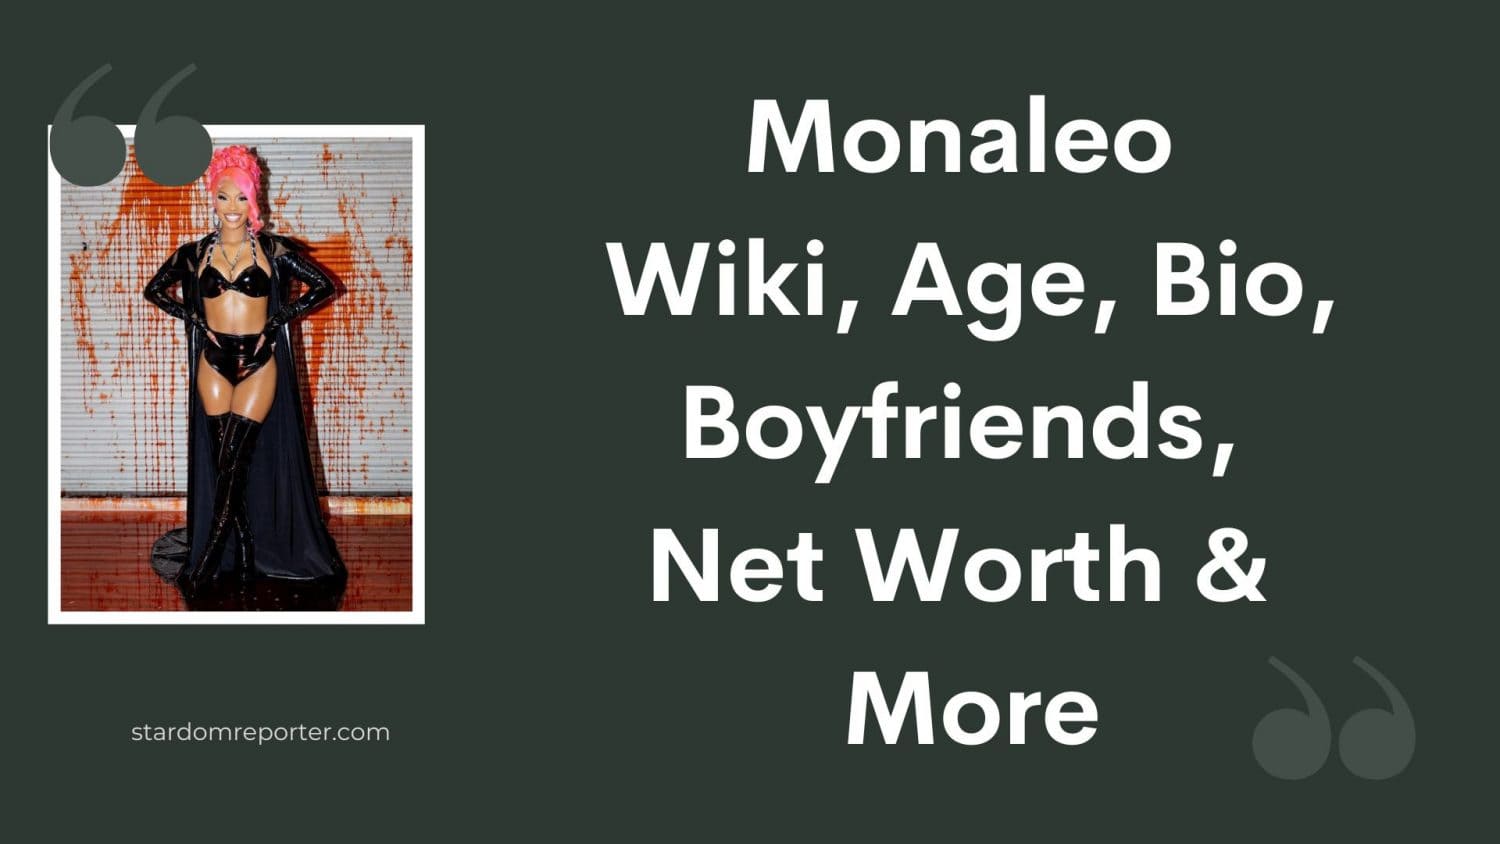 Monaleo Wiki, Age, Bio, Boyfriends, Net Worth & More - 43